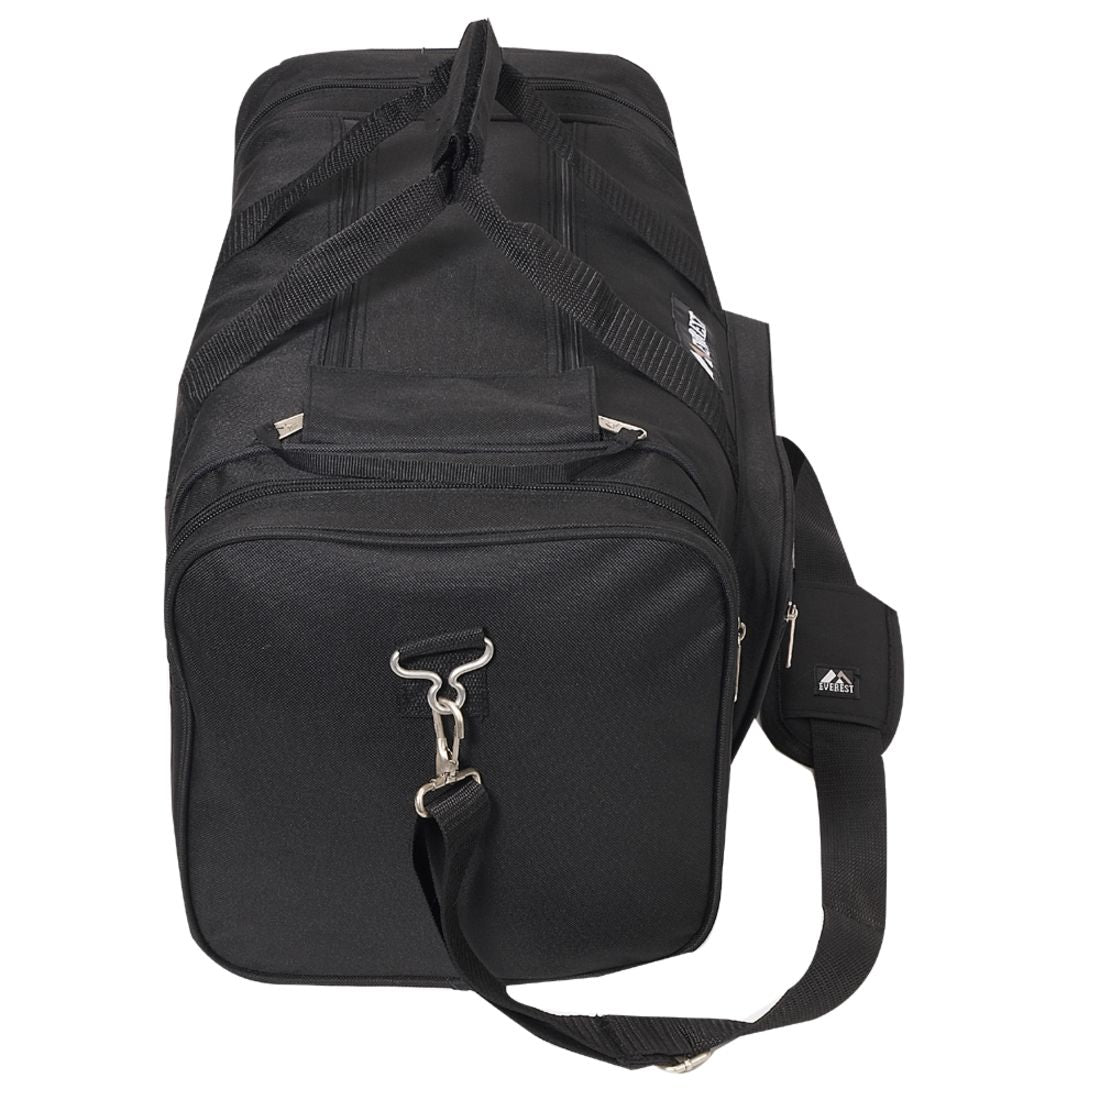 Everest Small Classic Gear Duffle Bag - Black, adult unisex